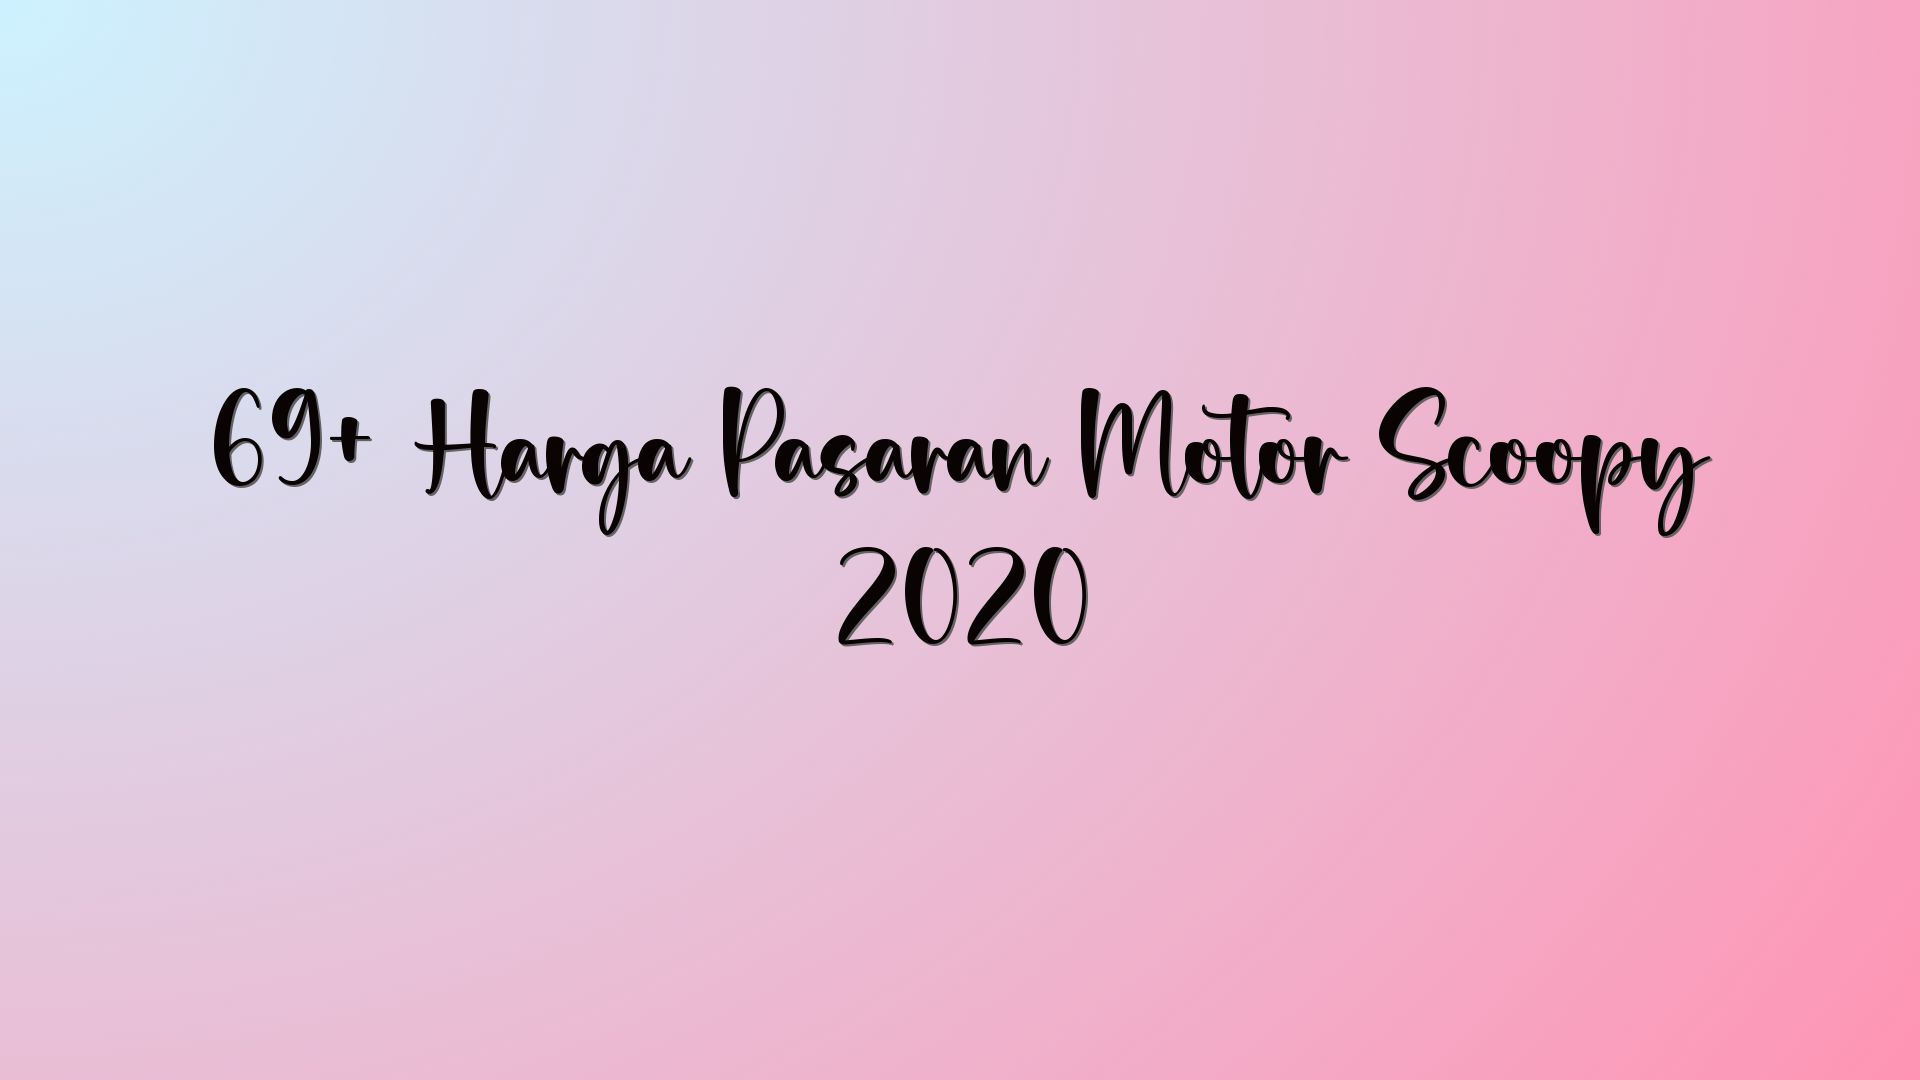 69+ Harga Pasaran Motor Scoopy 2020